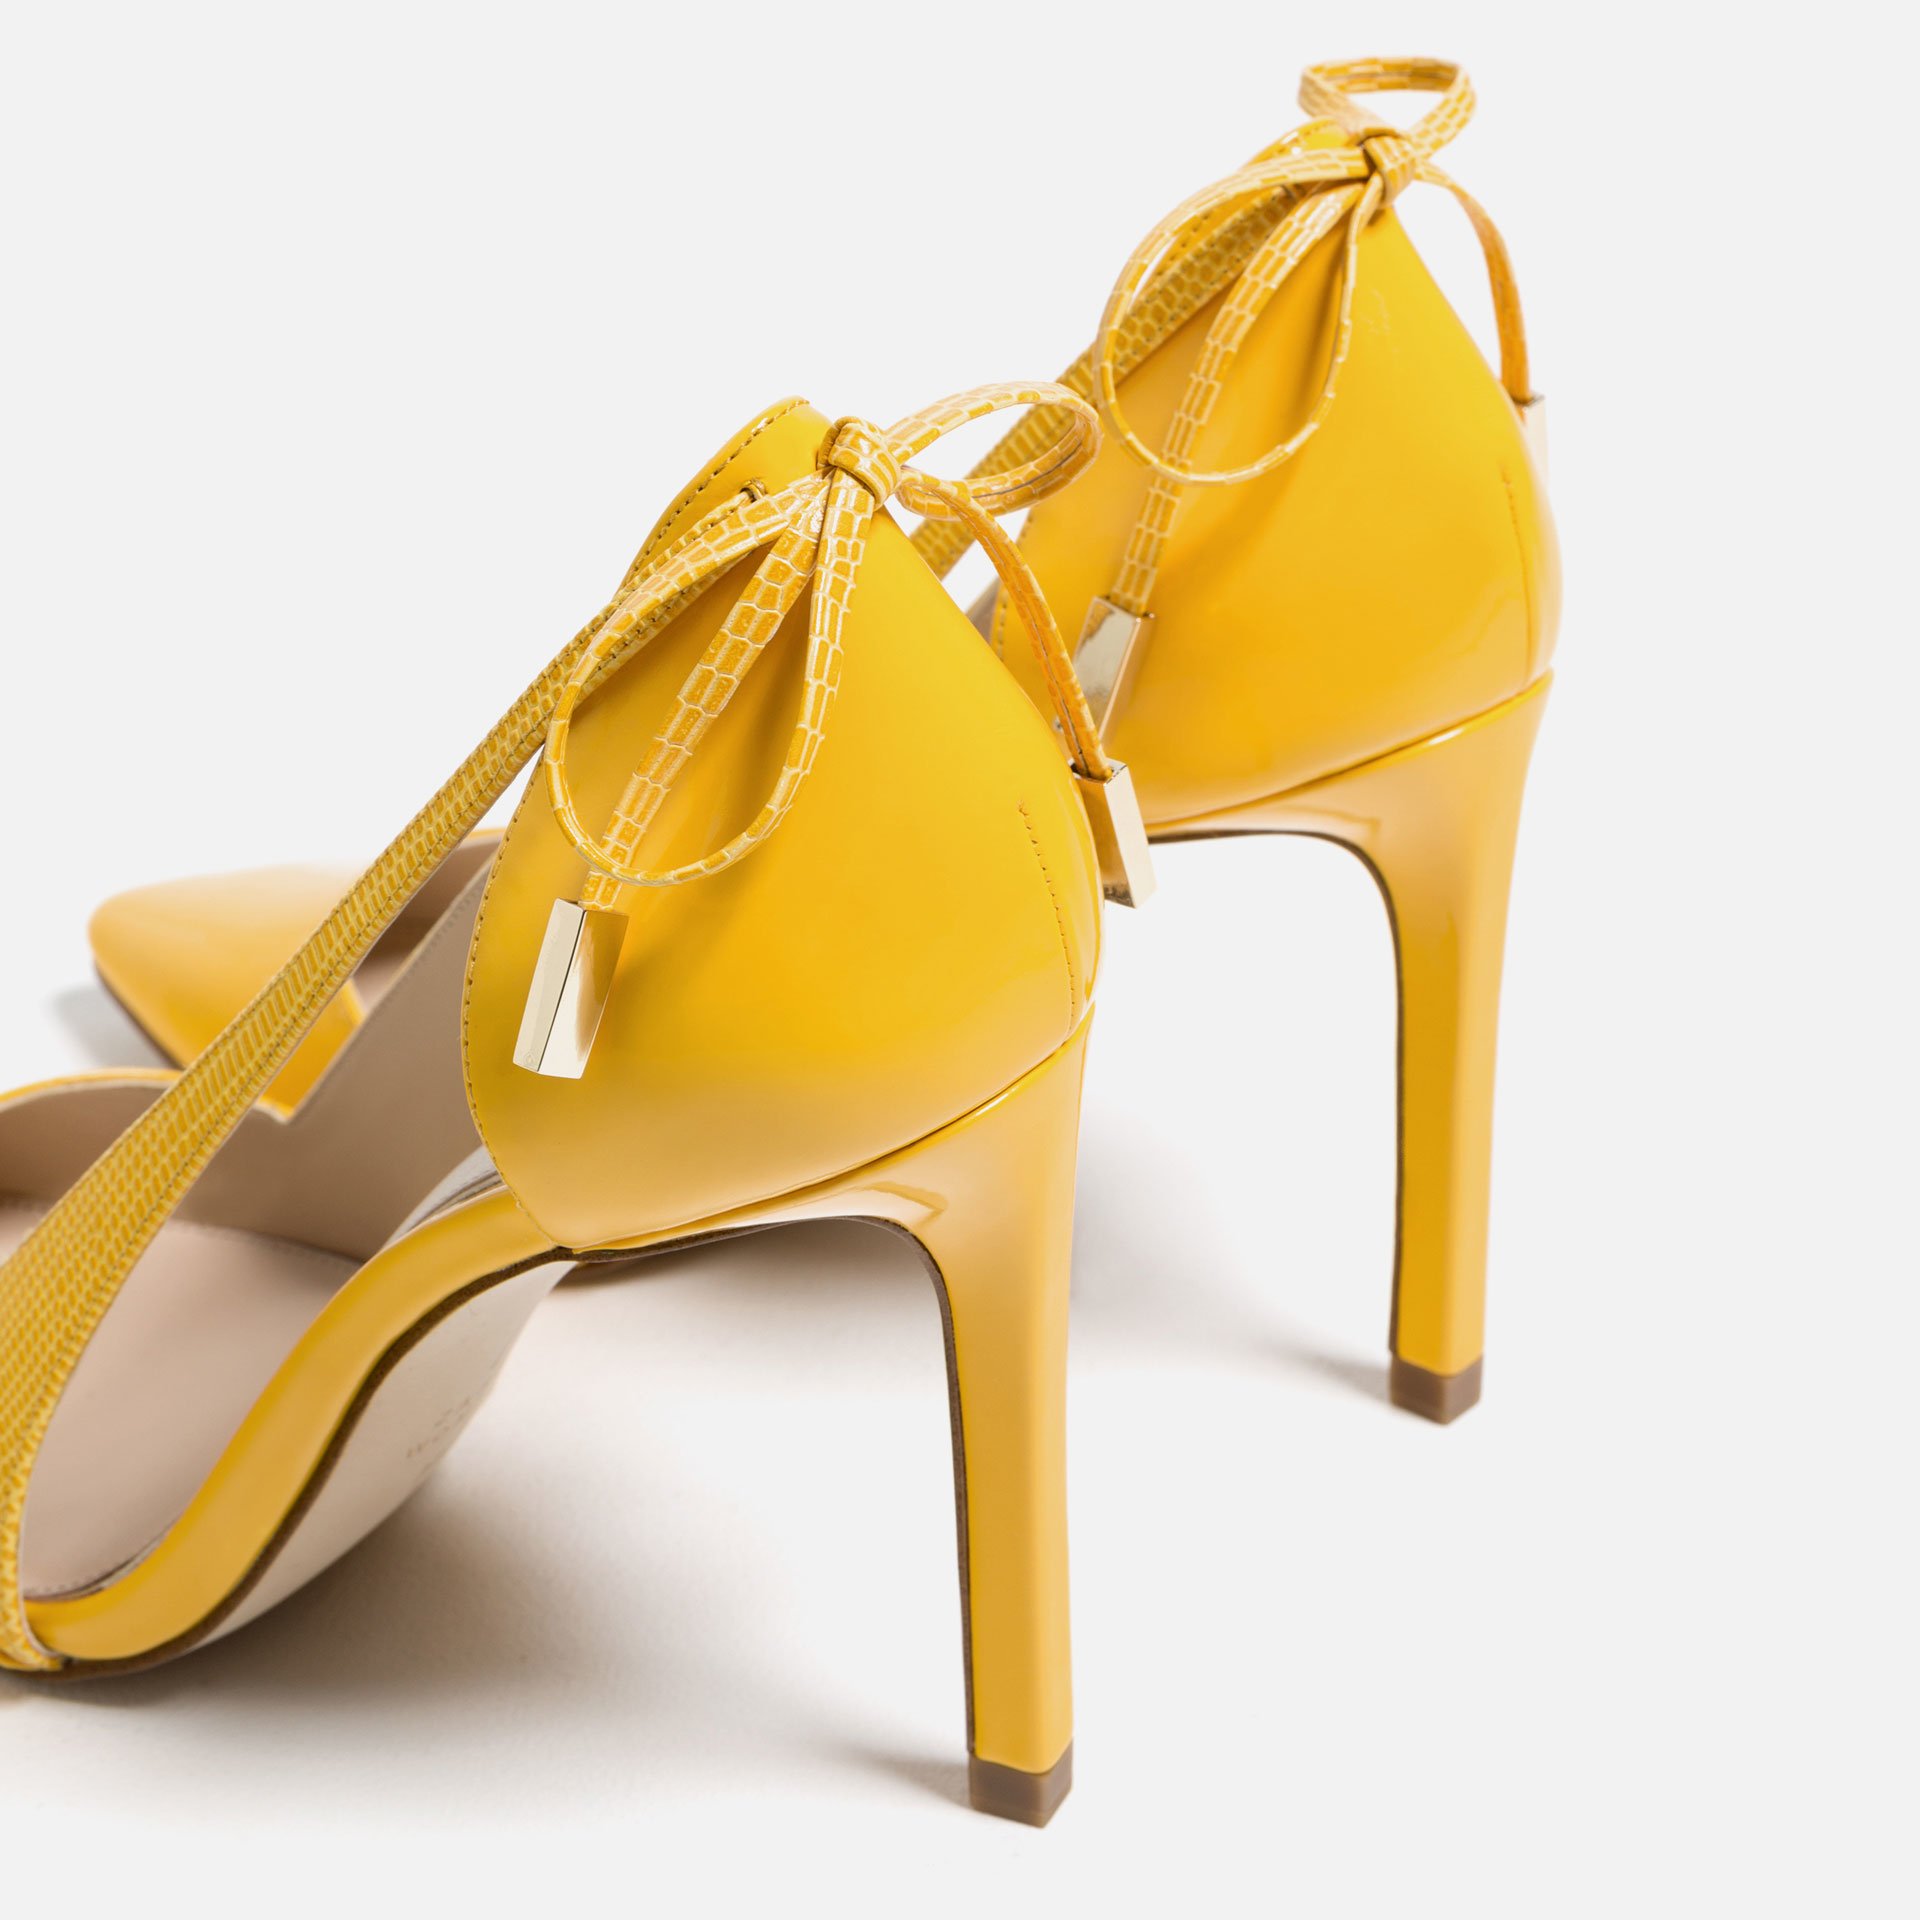 Zara Yellow Shoes | museosdelima.com